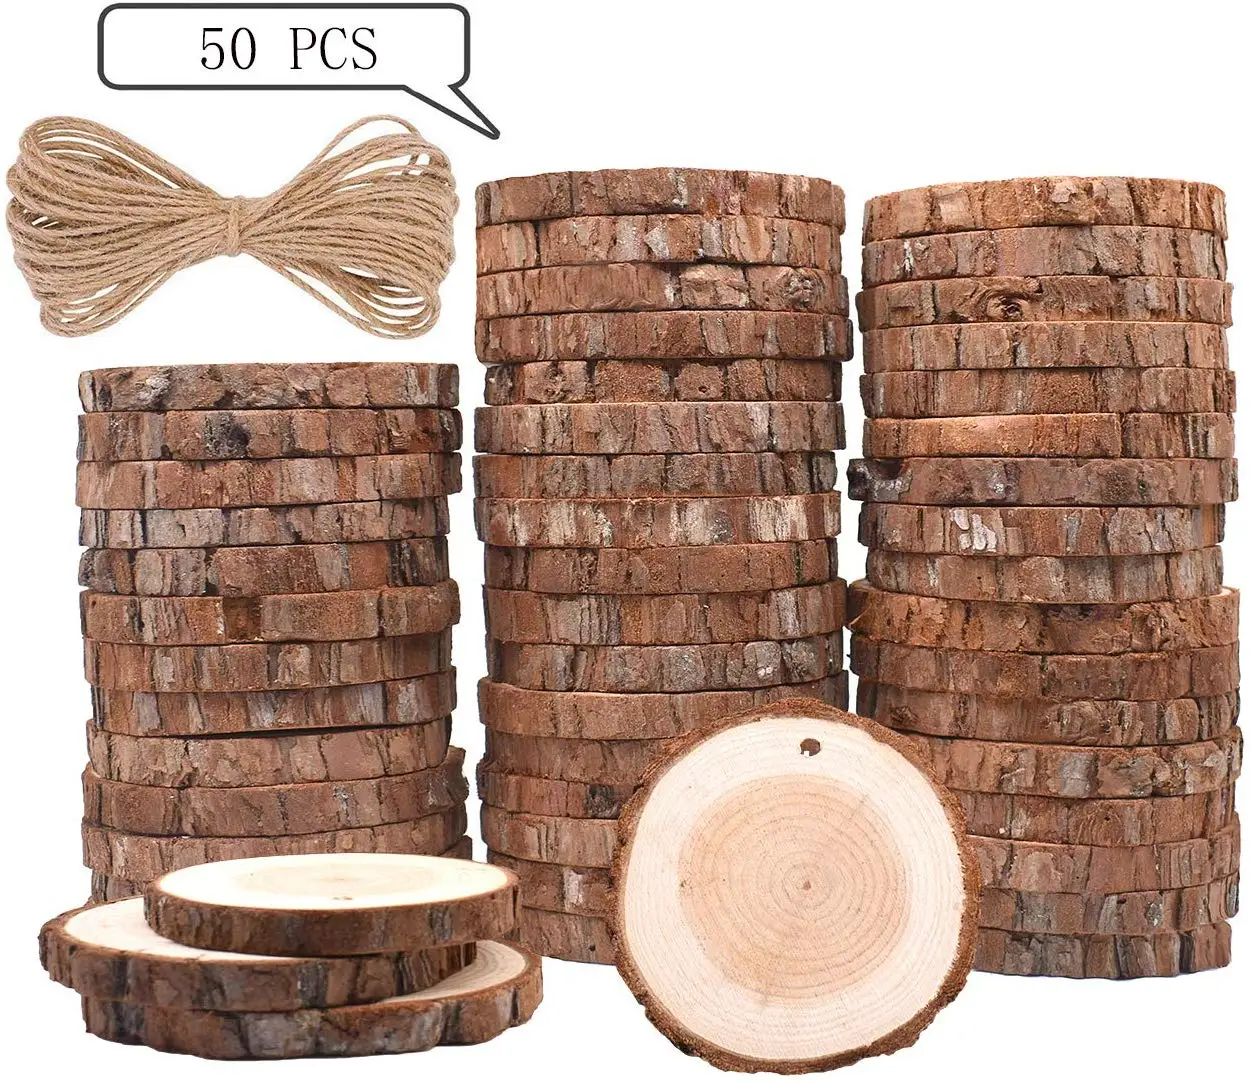 50pcs Natural Wood Slices Round Circle Tree Bark Log 2-7cm Wooden Circles for DIY Crafts Wedding Decorations Christmas Ornaments